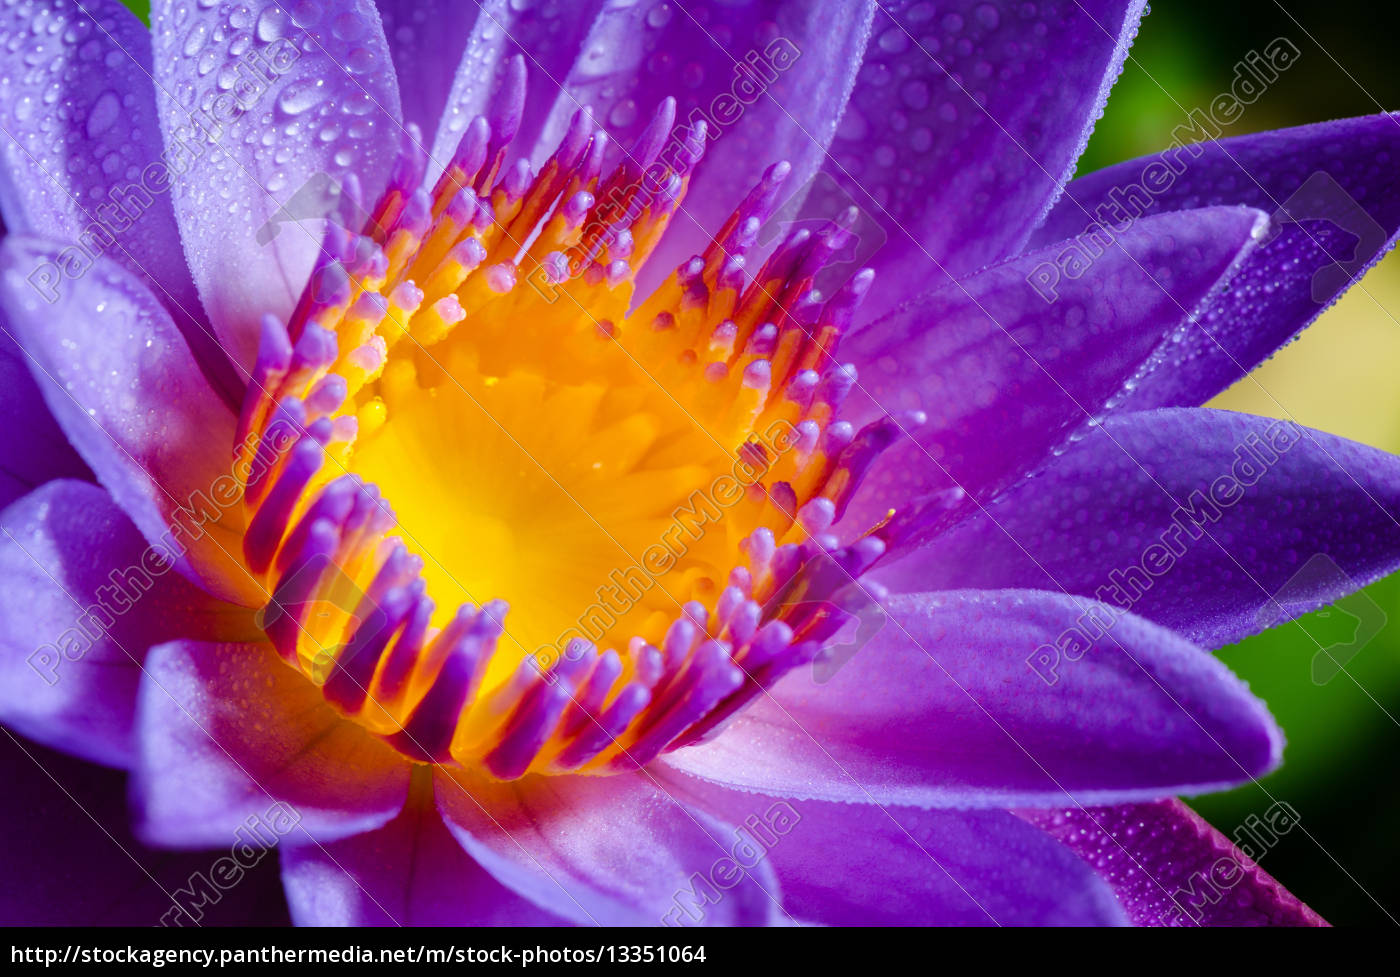 facebook cover photo lotus flower